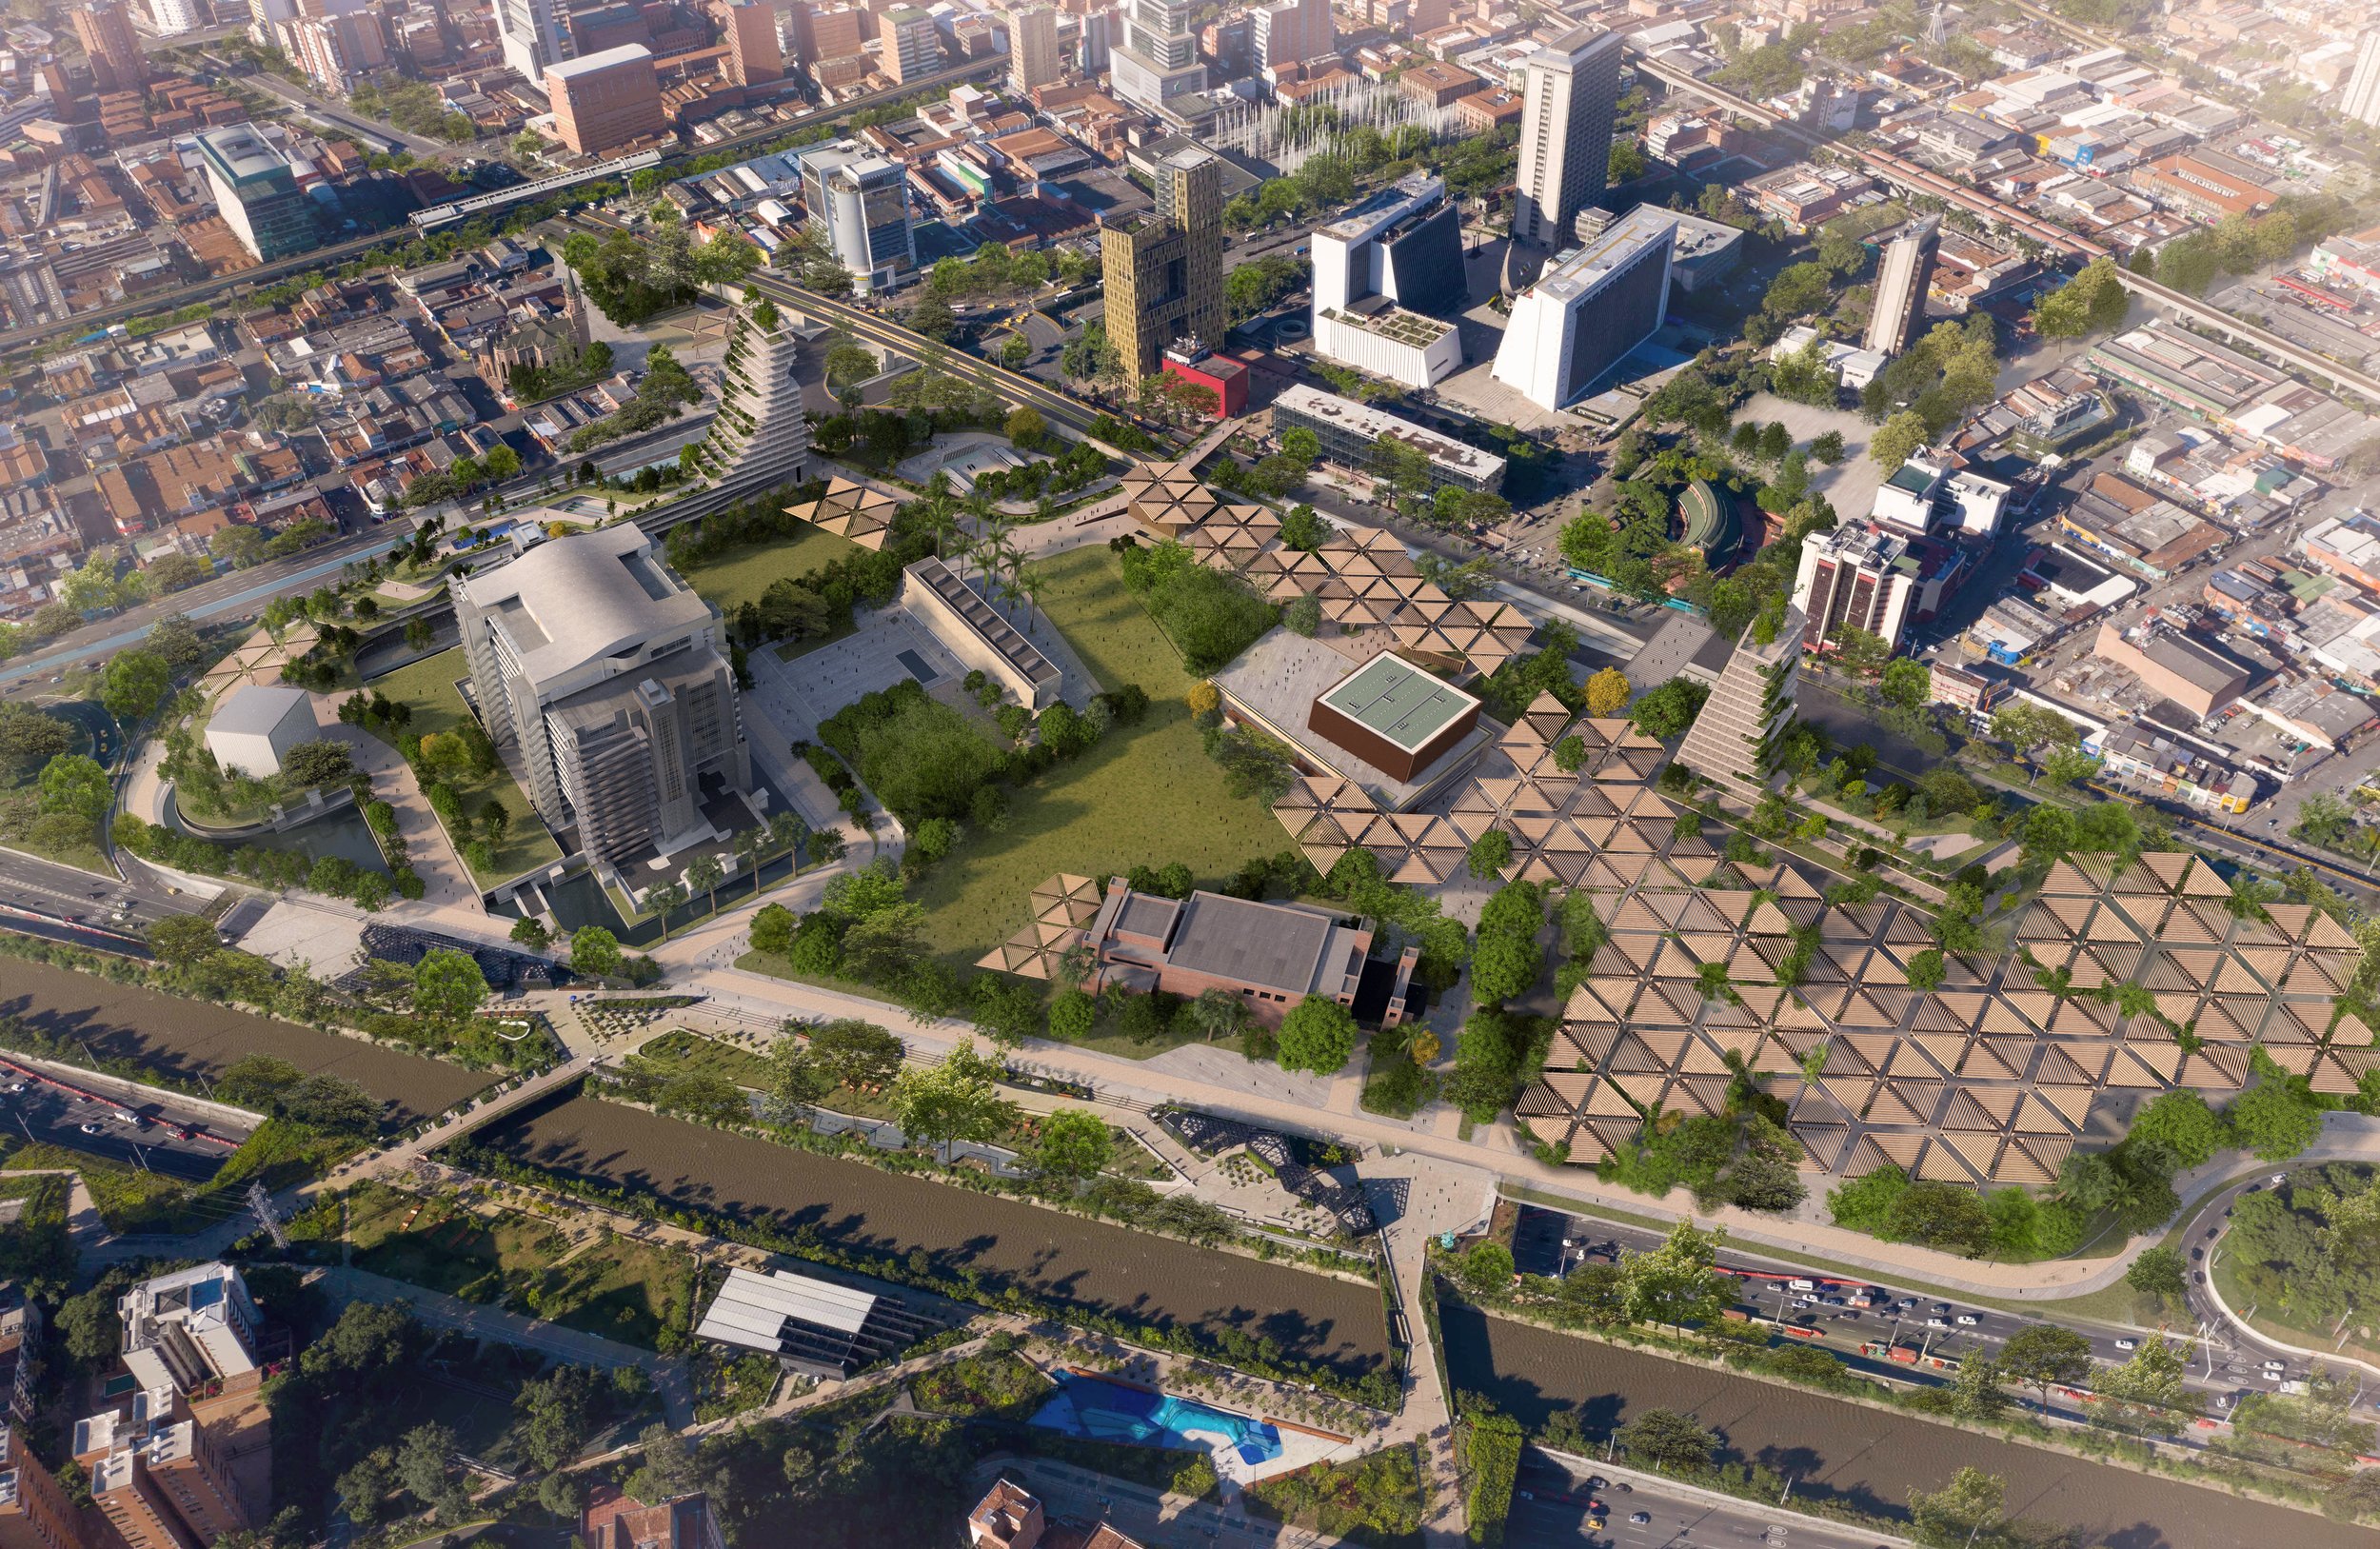 Plan Visión Parque Central Centro Cívico, Medellín